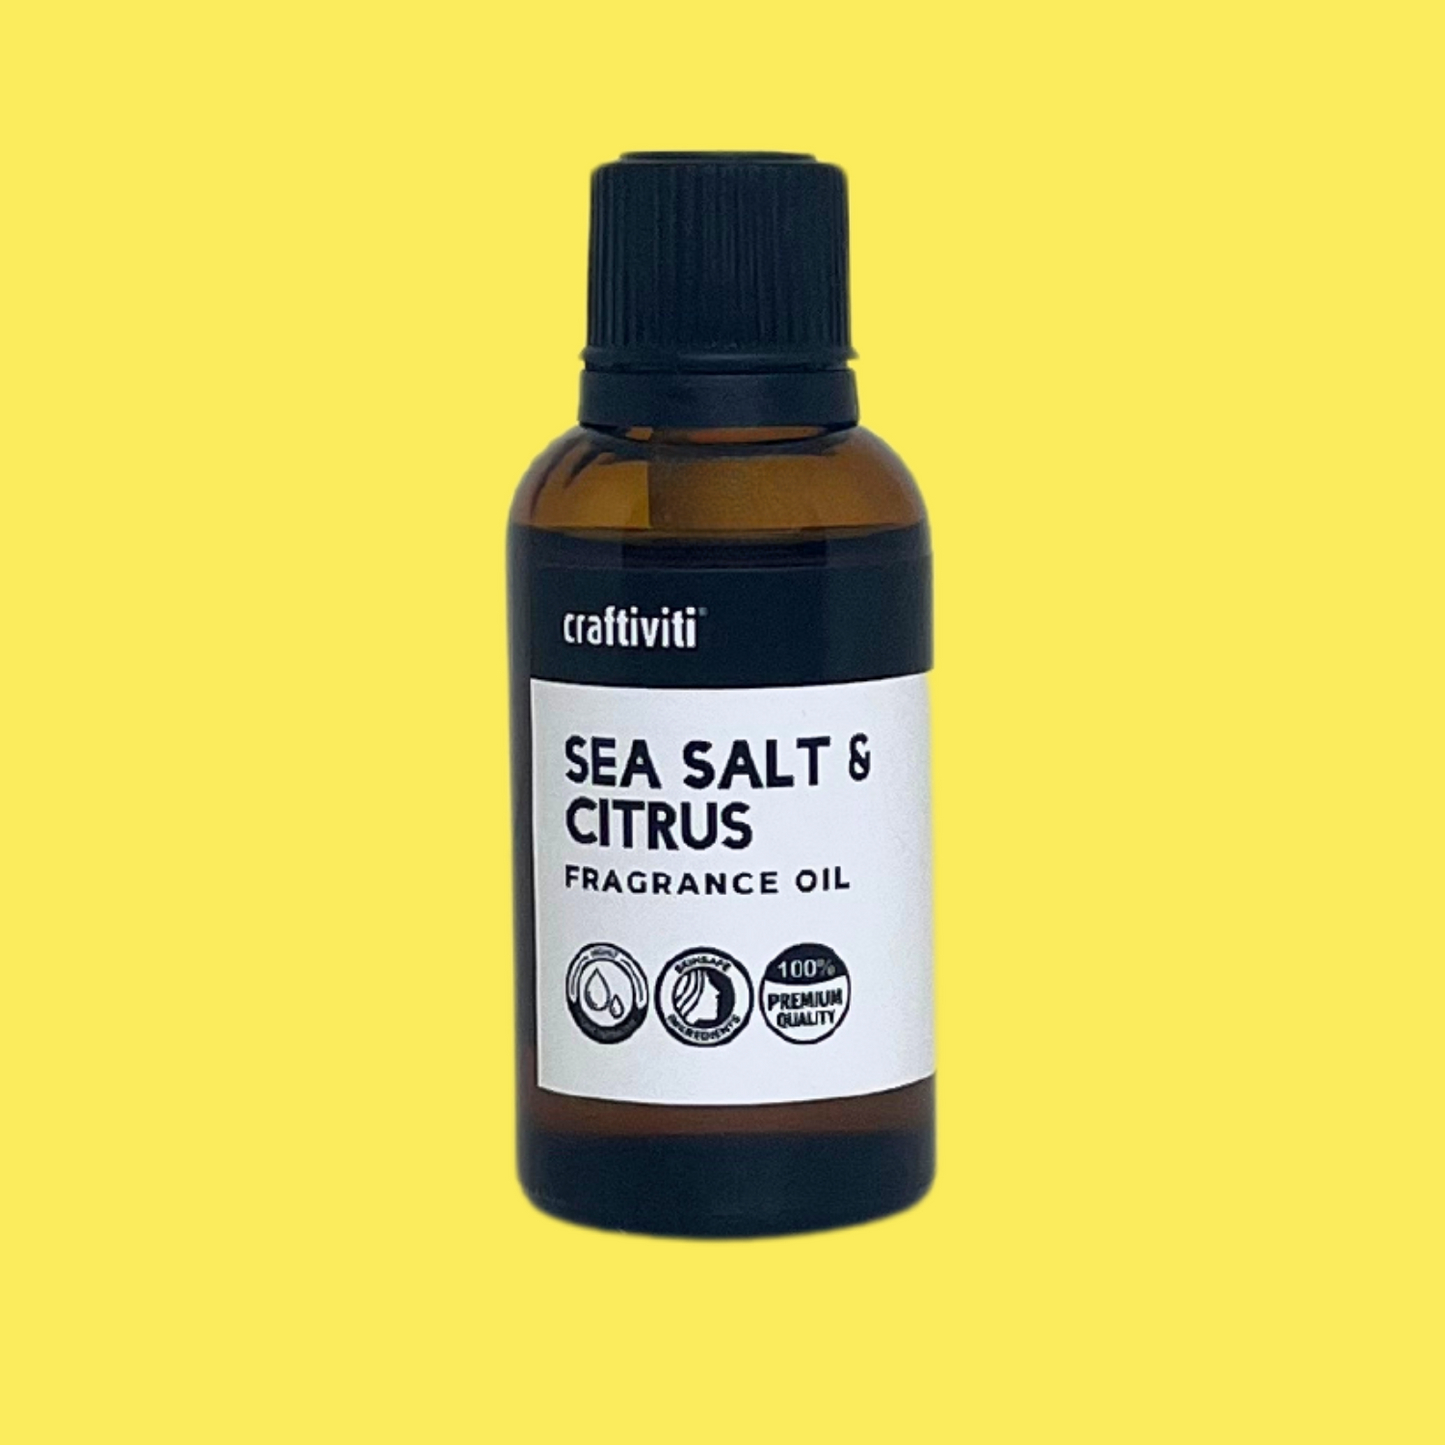 Sea Salt & Citrus Fragrance Oil